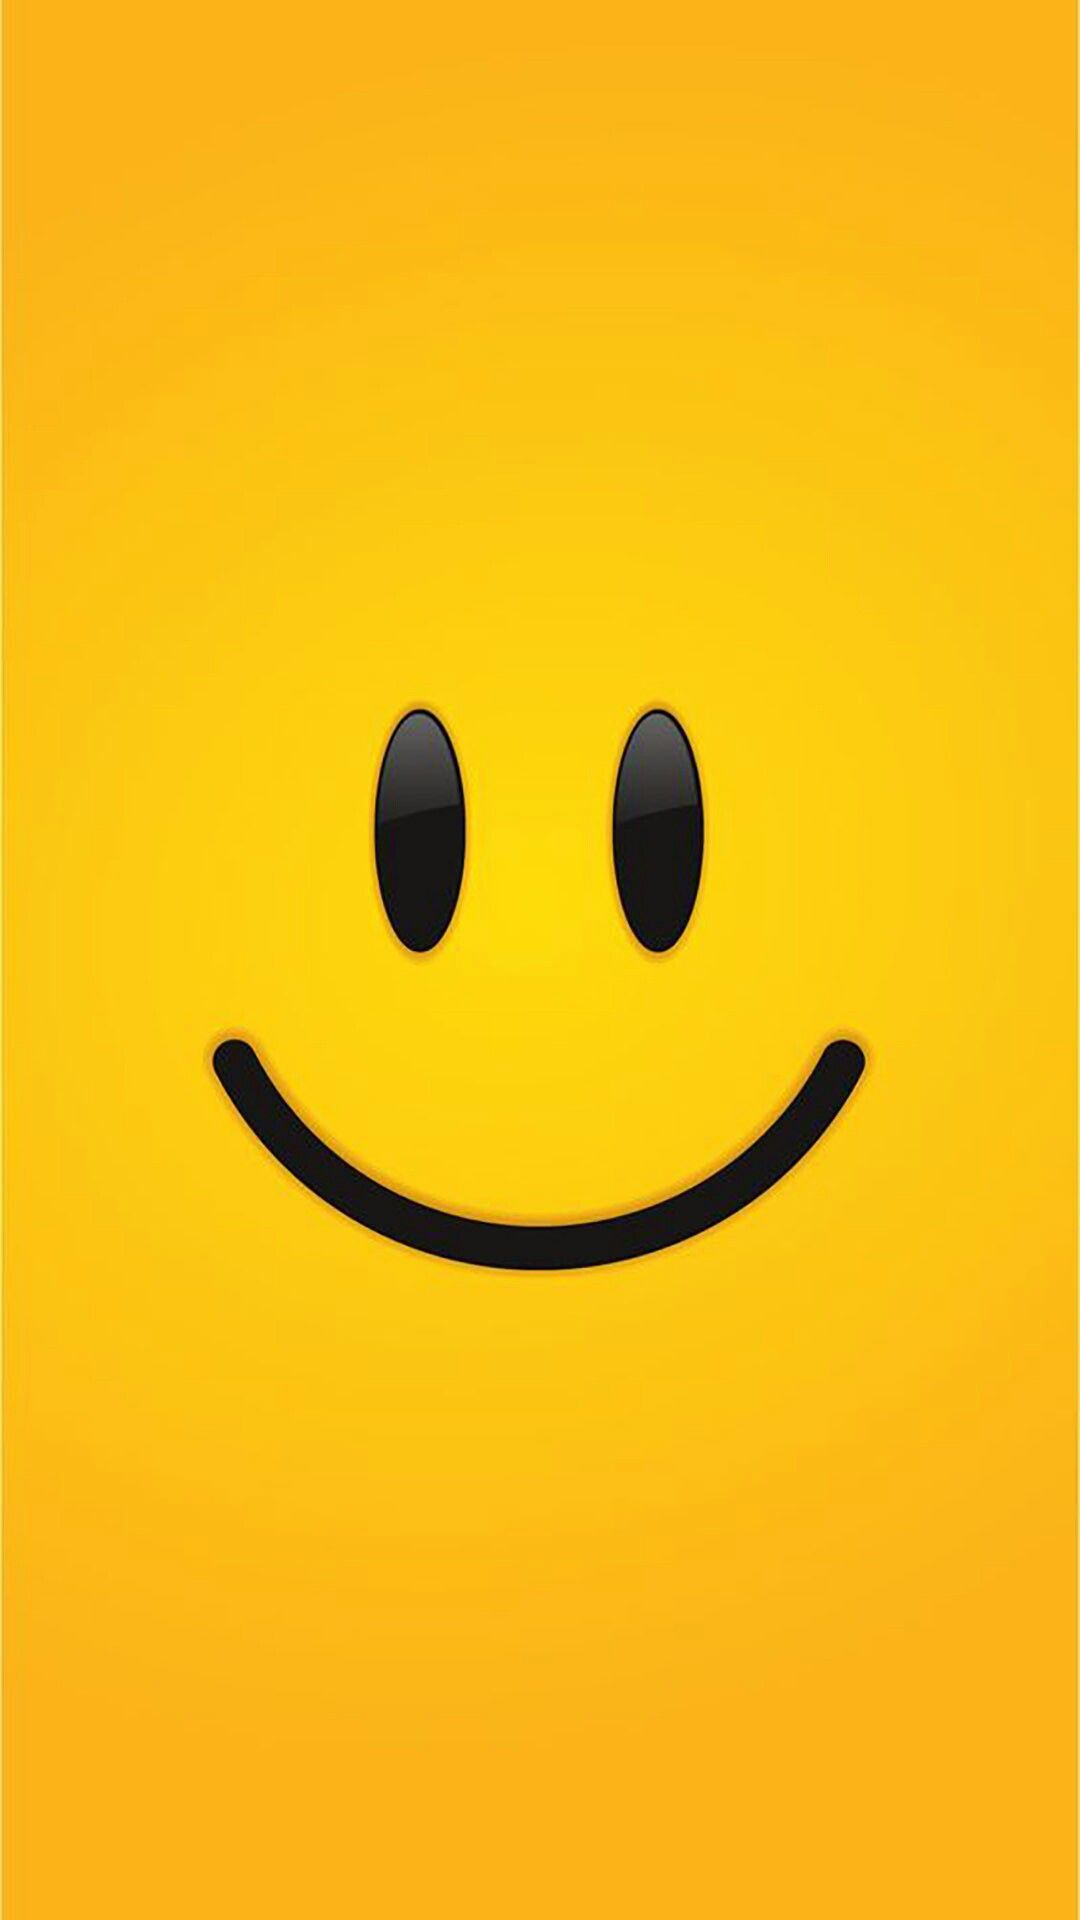 Smiley Face Wallpaper iPhone Teahub Io